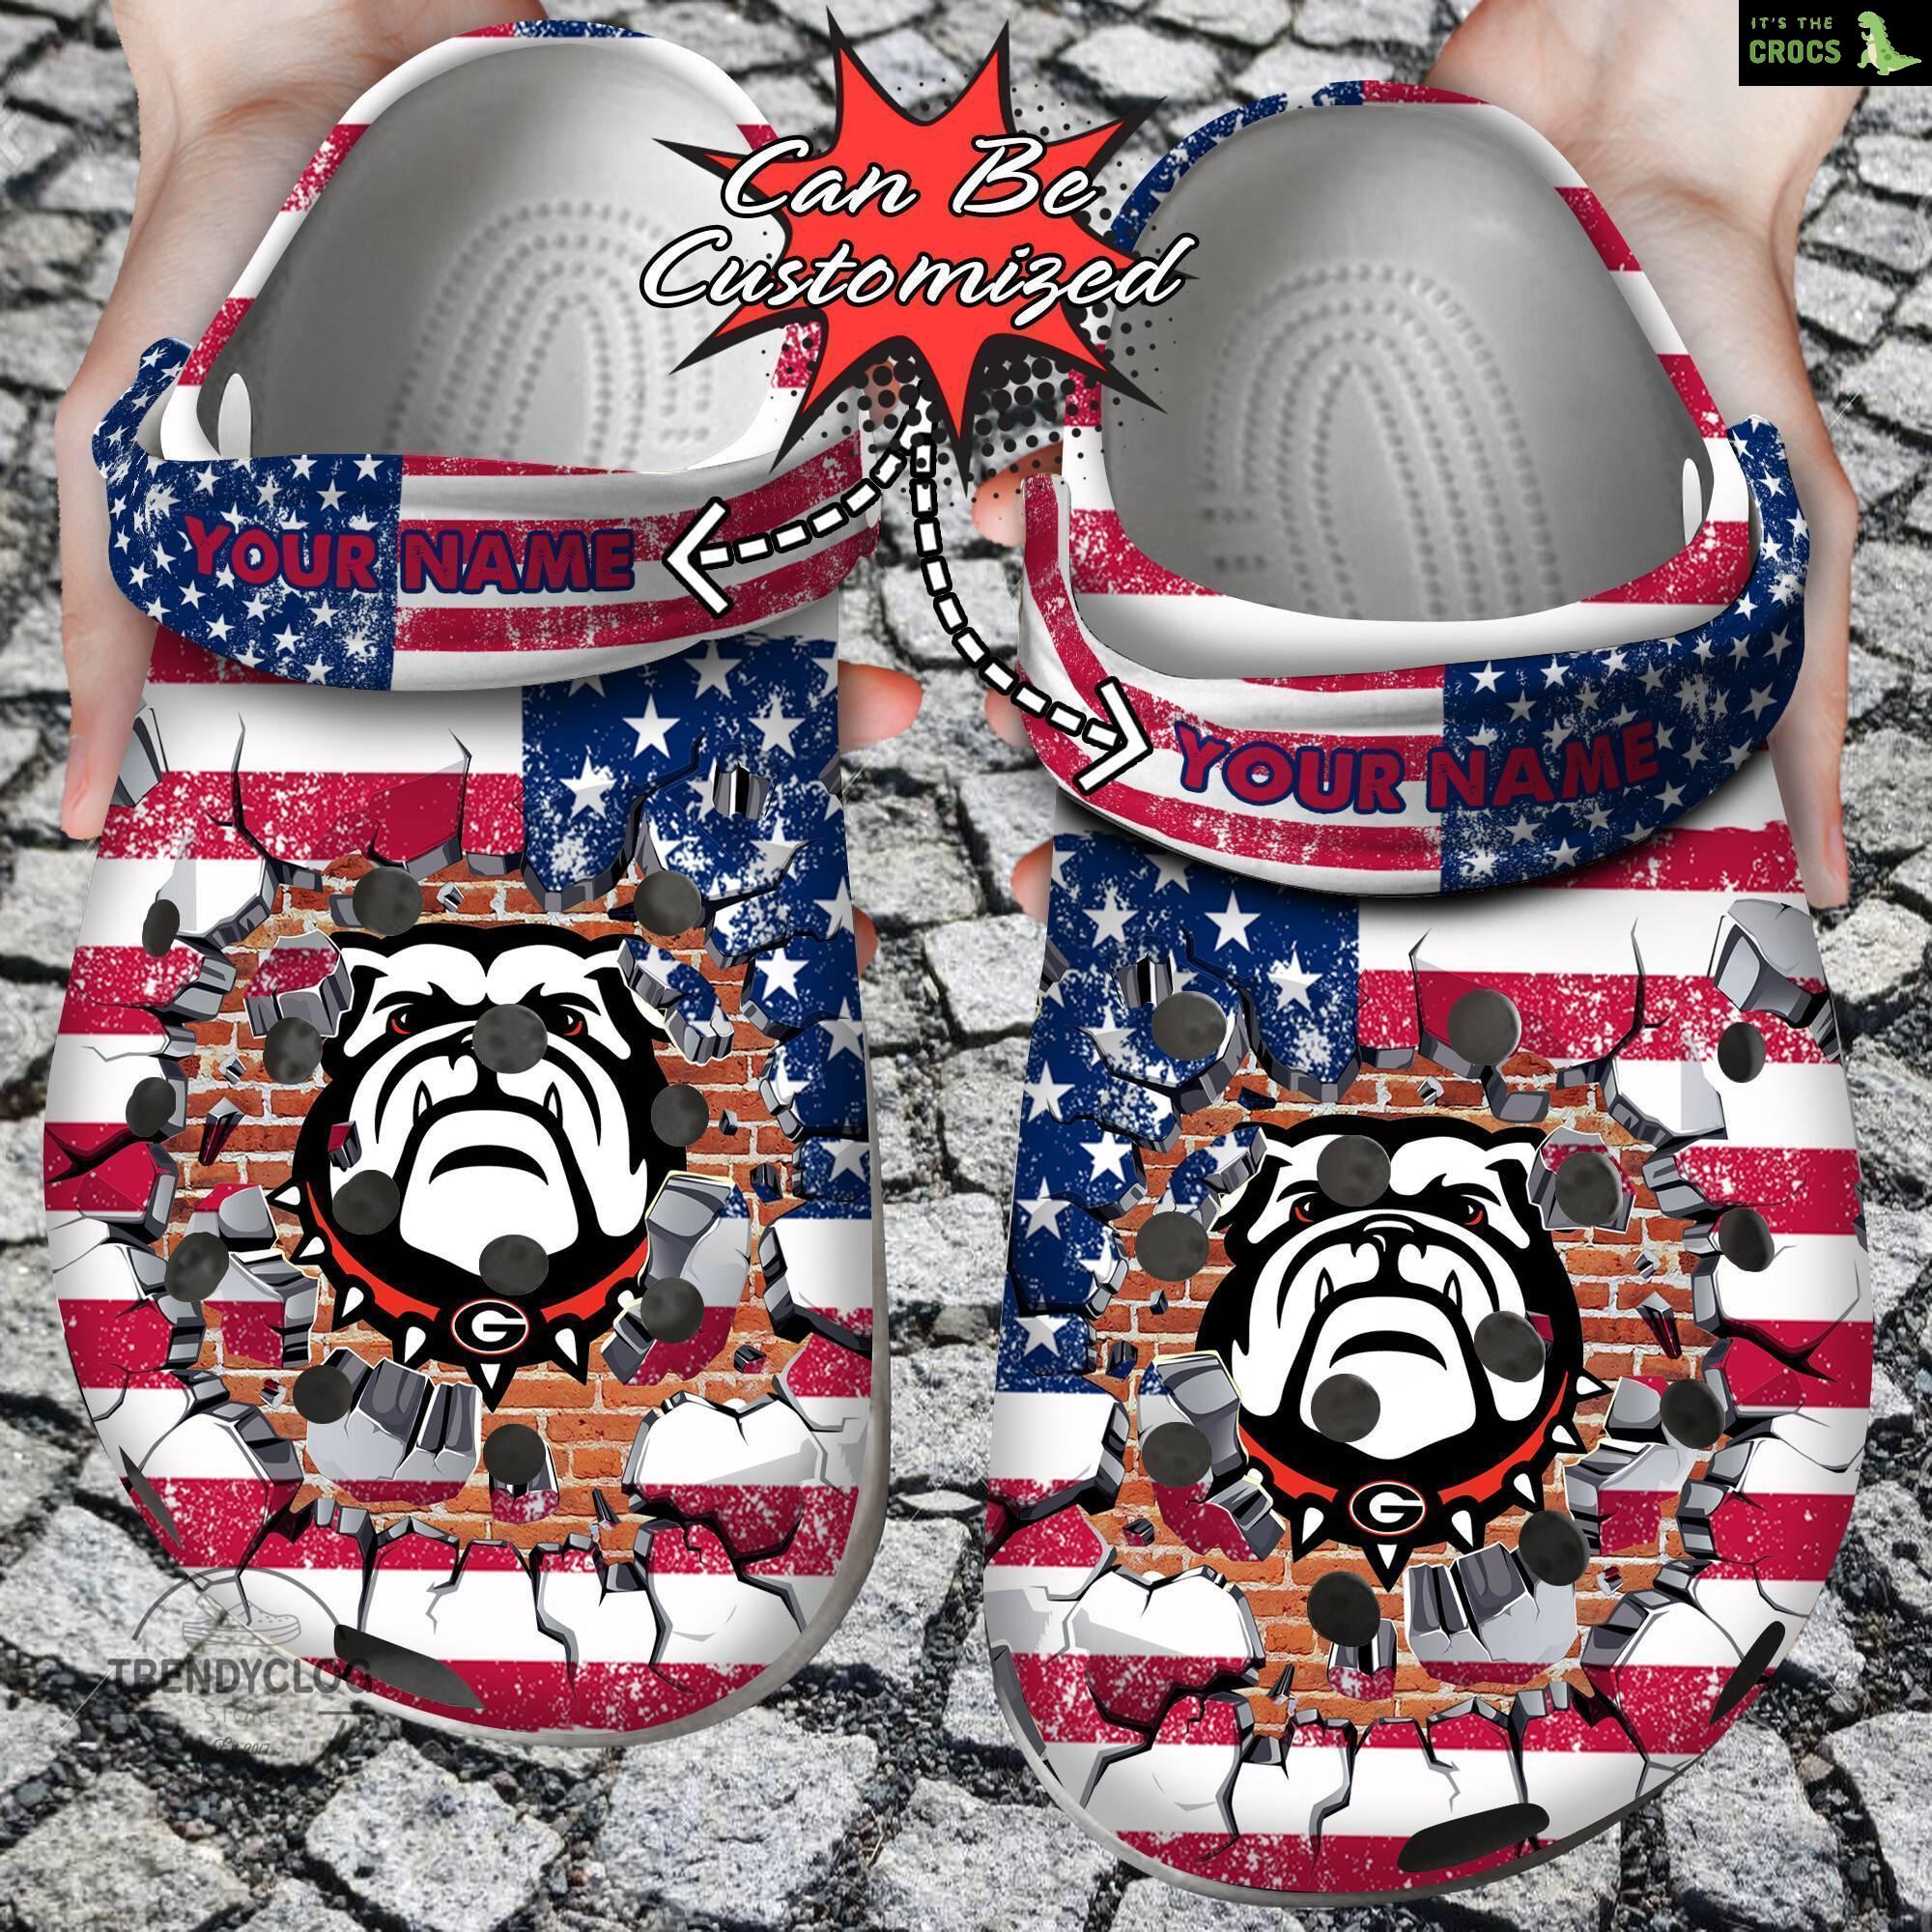 Sport Crocs Personalized GBulldogs University American Flag New Clog Shoes